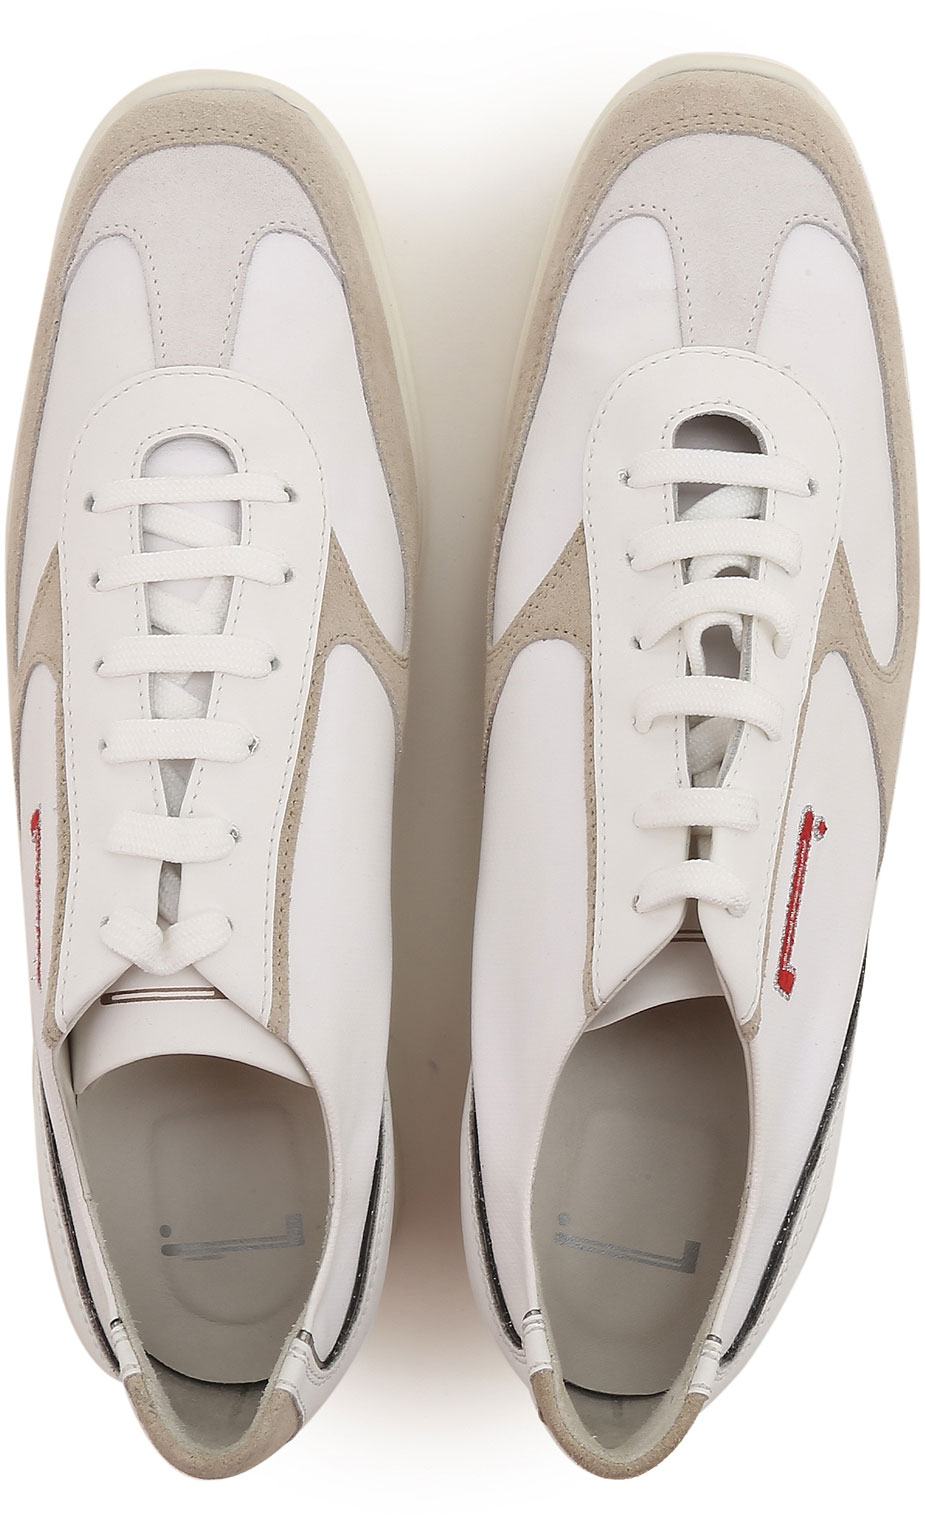 Womens Shoes Pirelli, Style code: evita-02-white